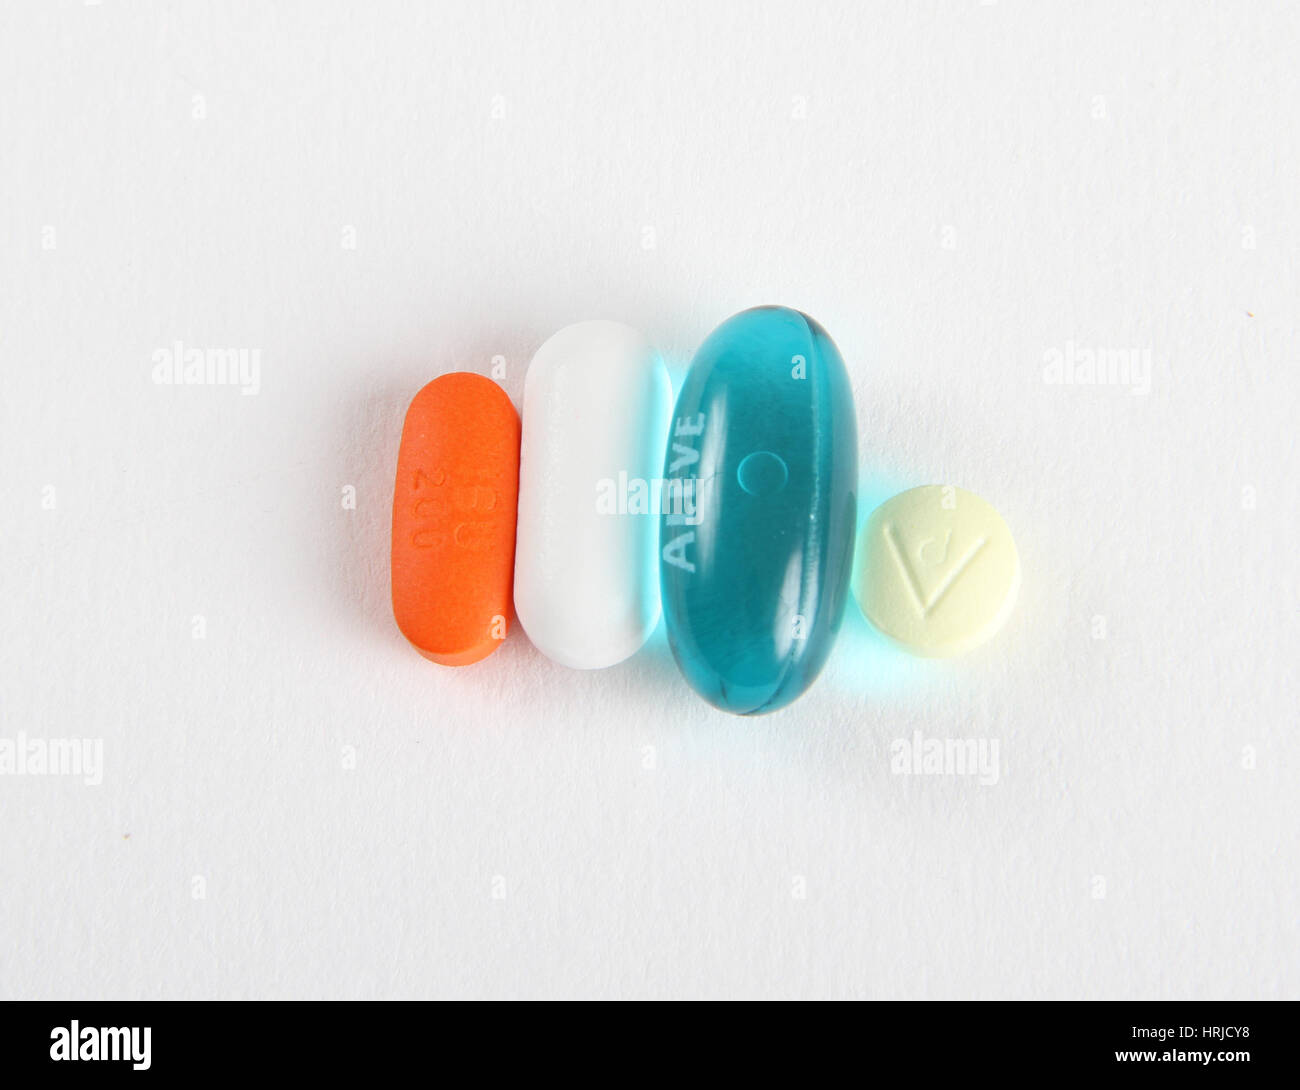 Pain Medication Stock Photo Alamy